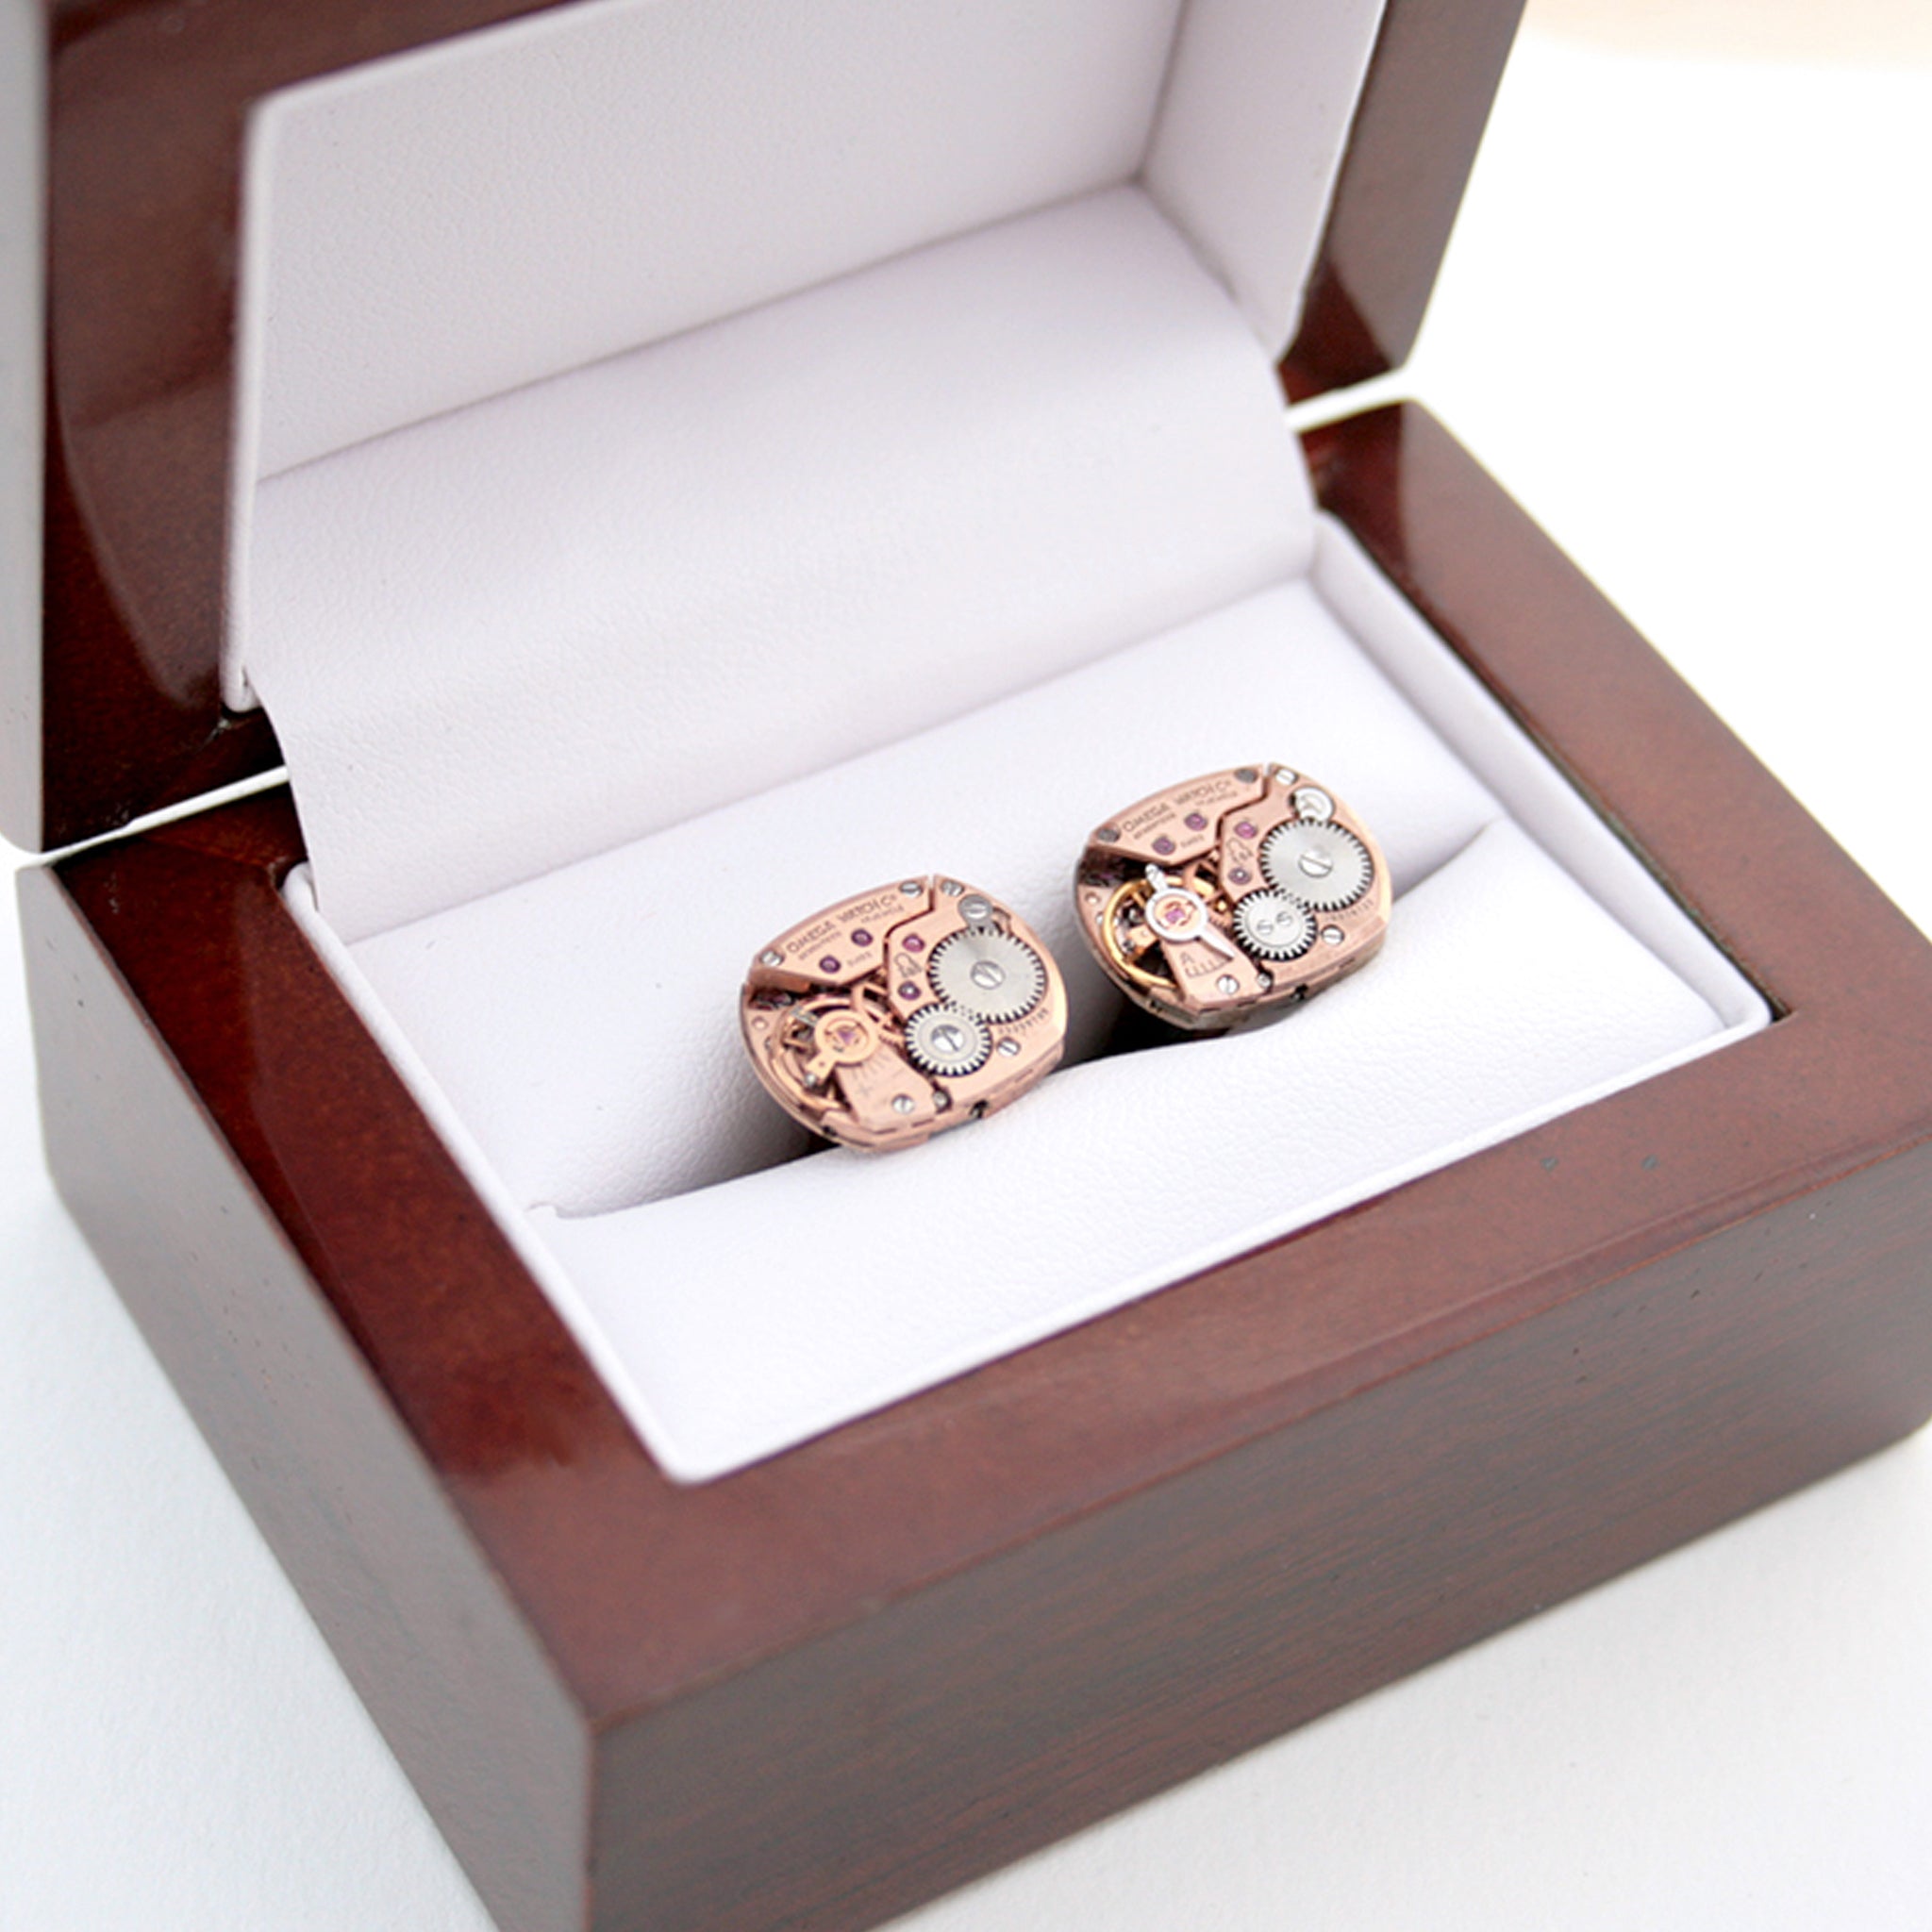 Omega Watch Copper Cufflinks in rosewood wooden box